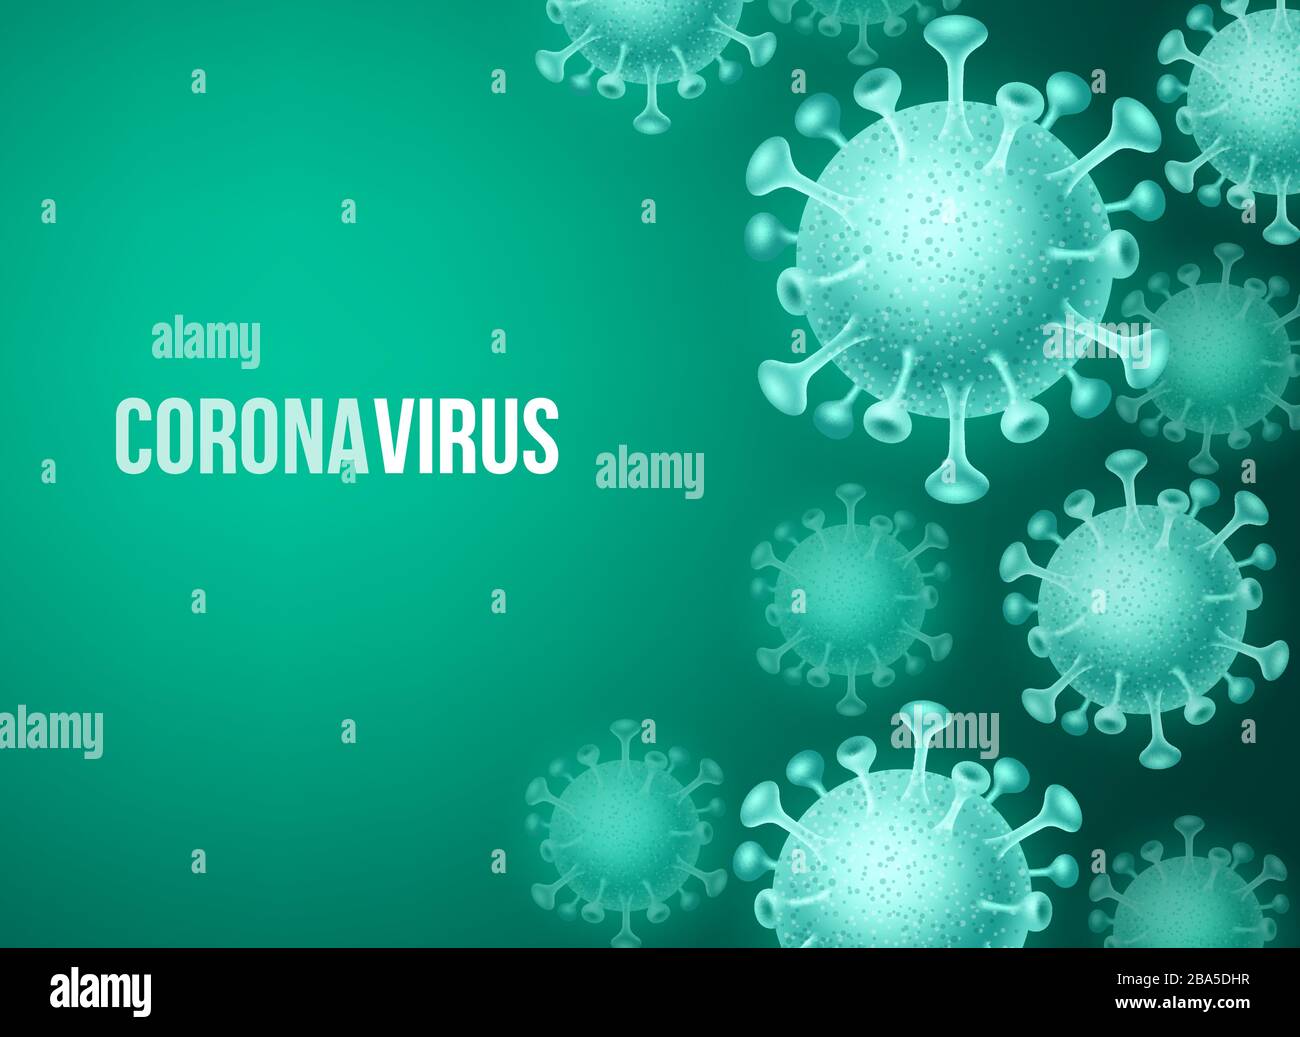 Corona Virus-Kovid-19-Vektor-Hintergrundvorlage. Corona Virus ncov pandemic Ausbruch und Welten tödliches Romanvirus im grünen Hintergrund. Vektor Stock Vektor